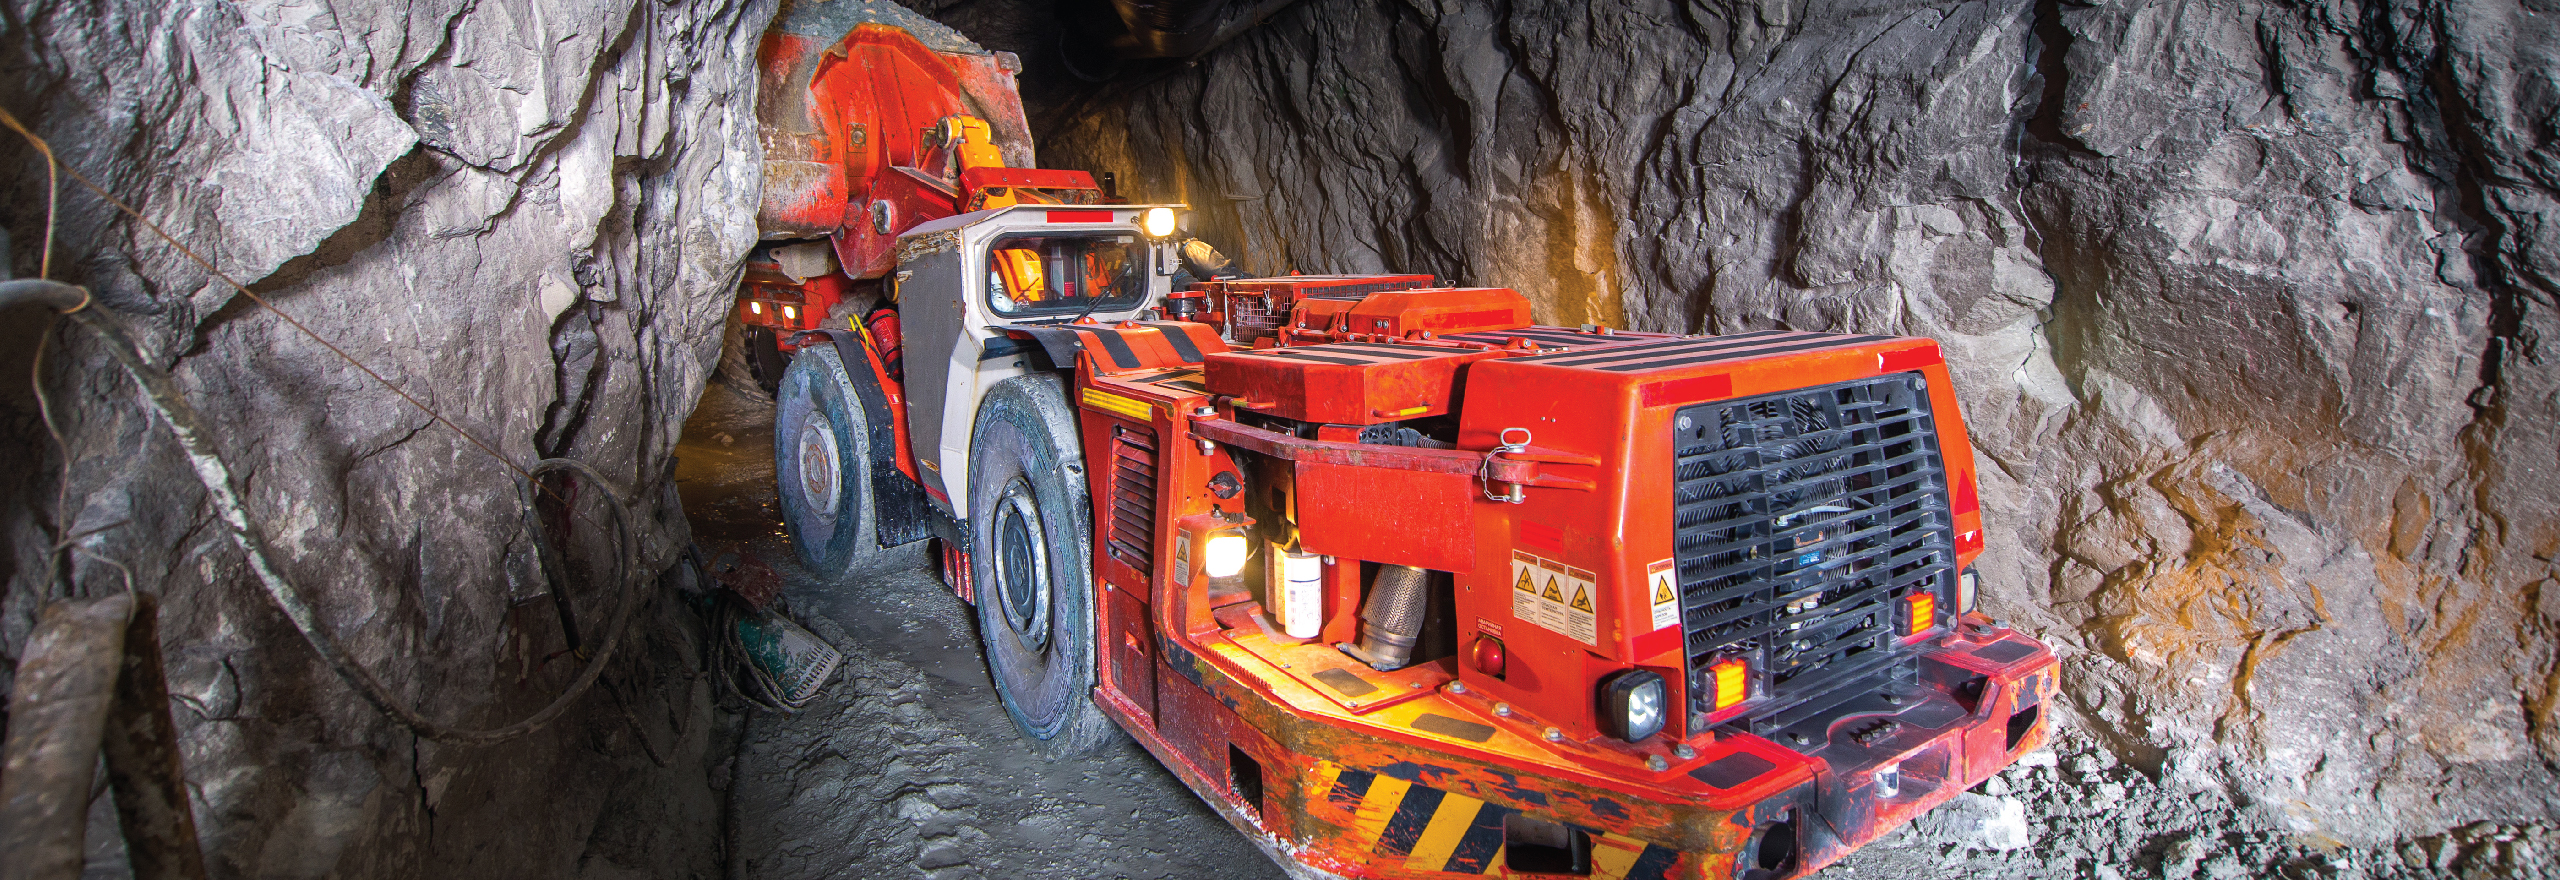 HxGN Underground Mining Operations